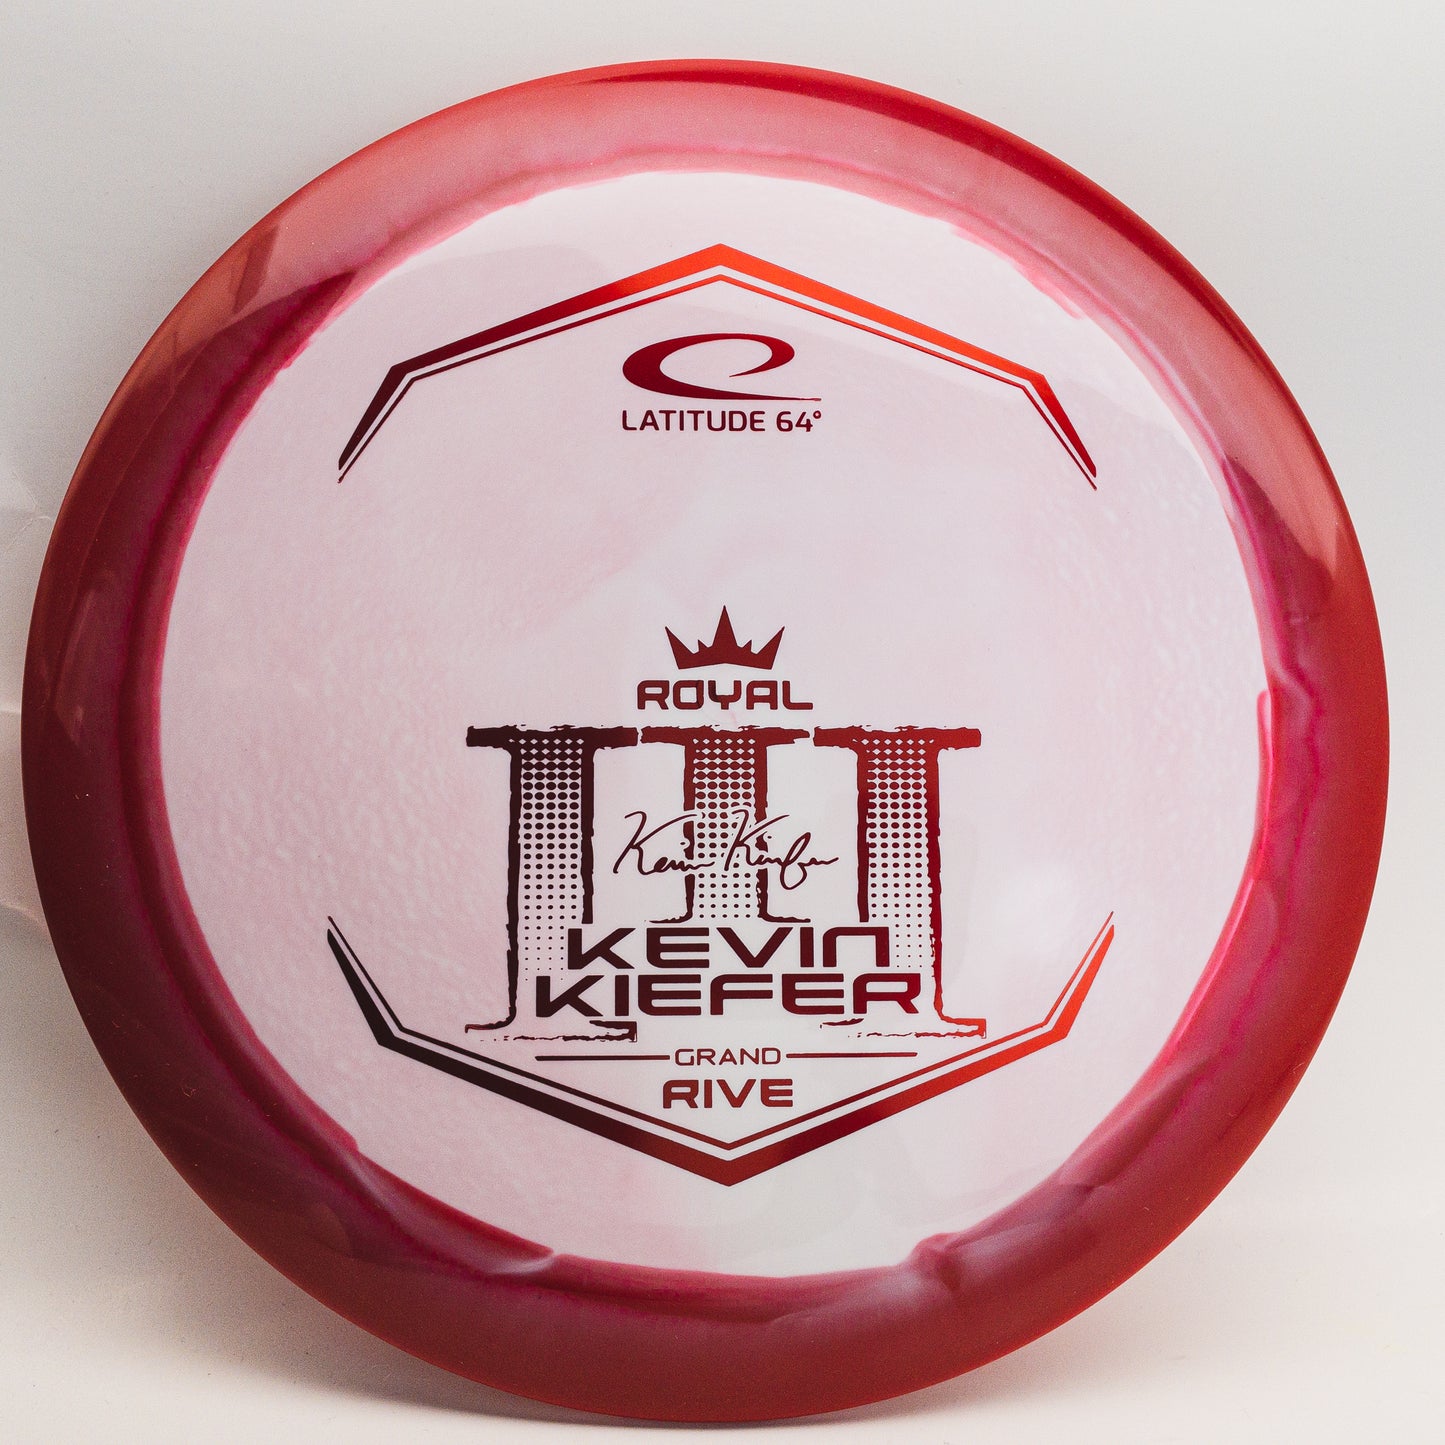 Latitude 64 Grand Orbit Rive - Kevin Kiefer 2022 Tour Series